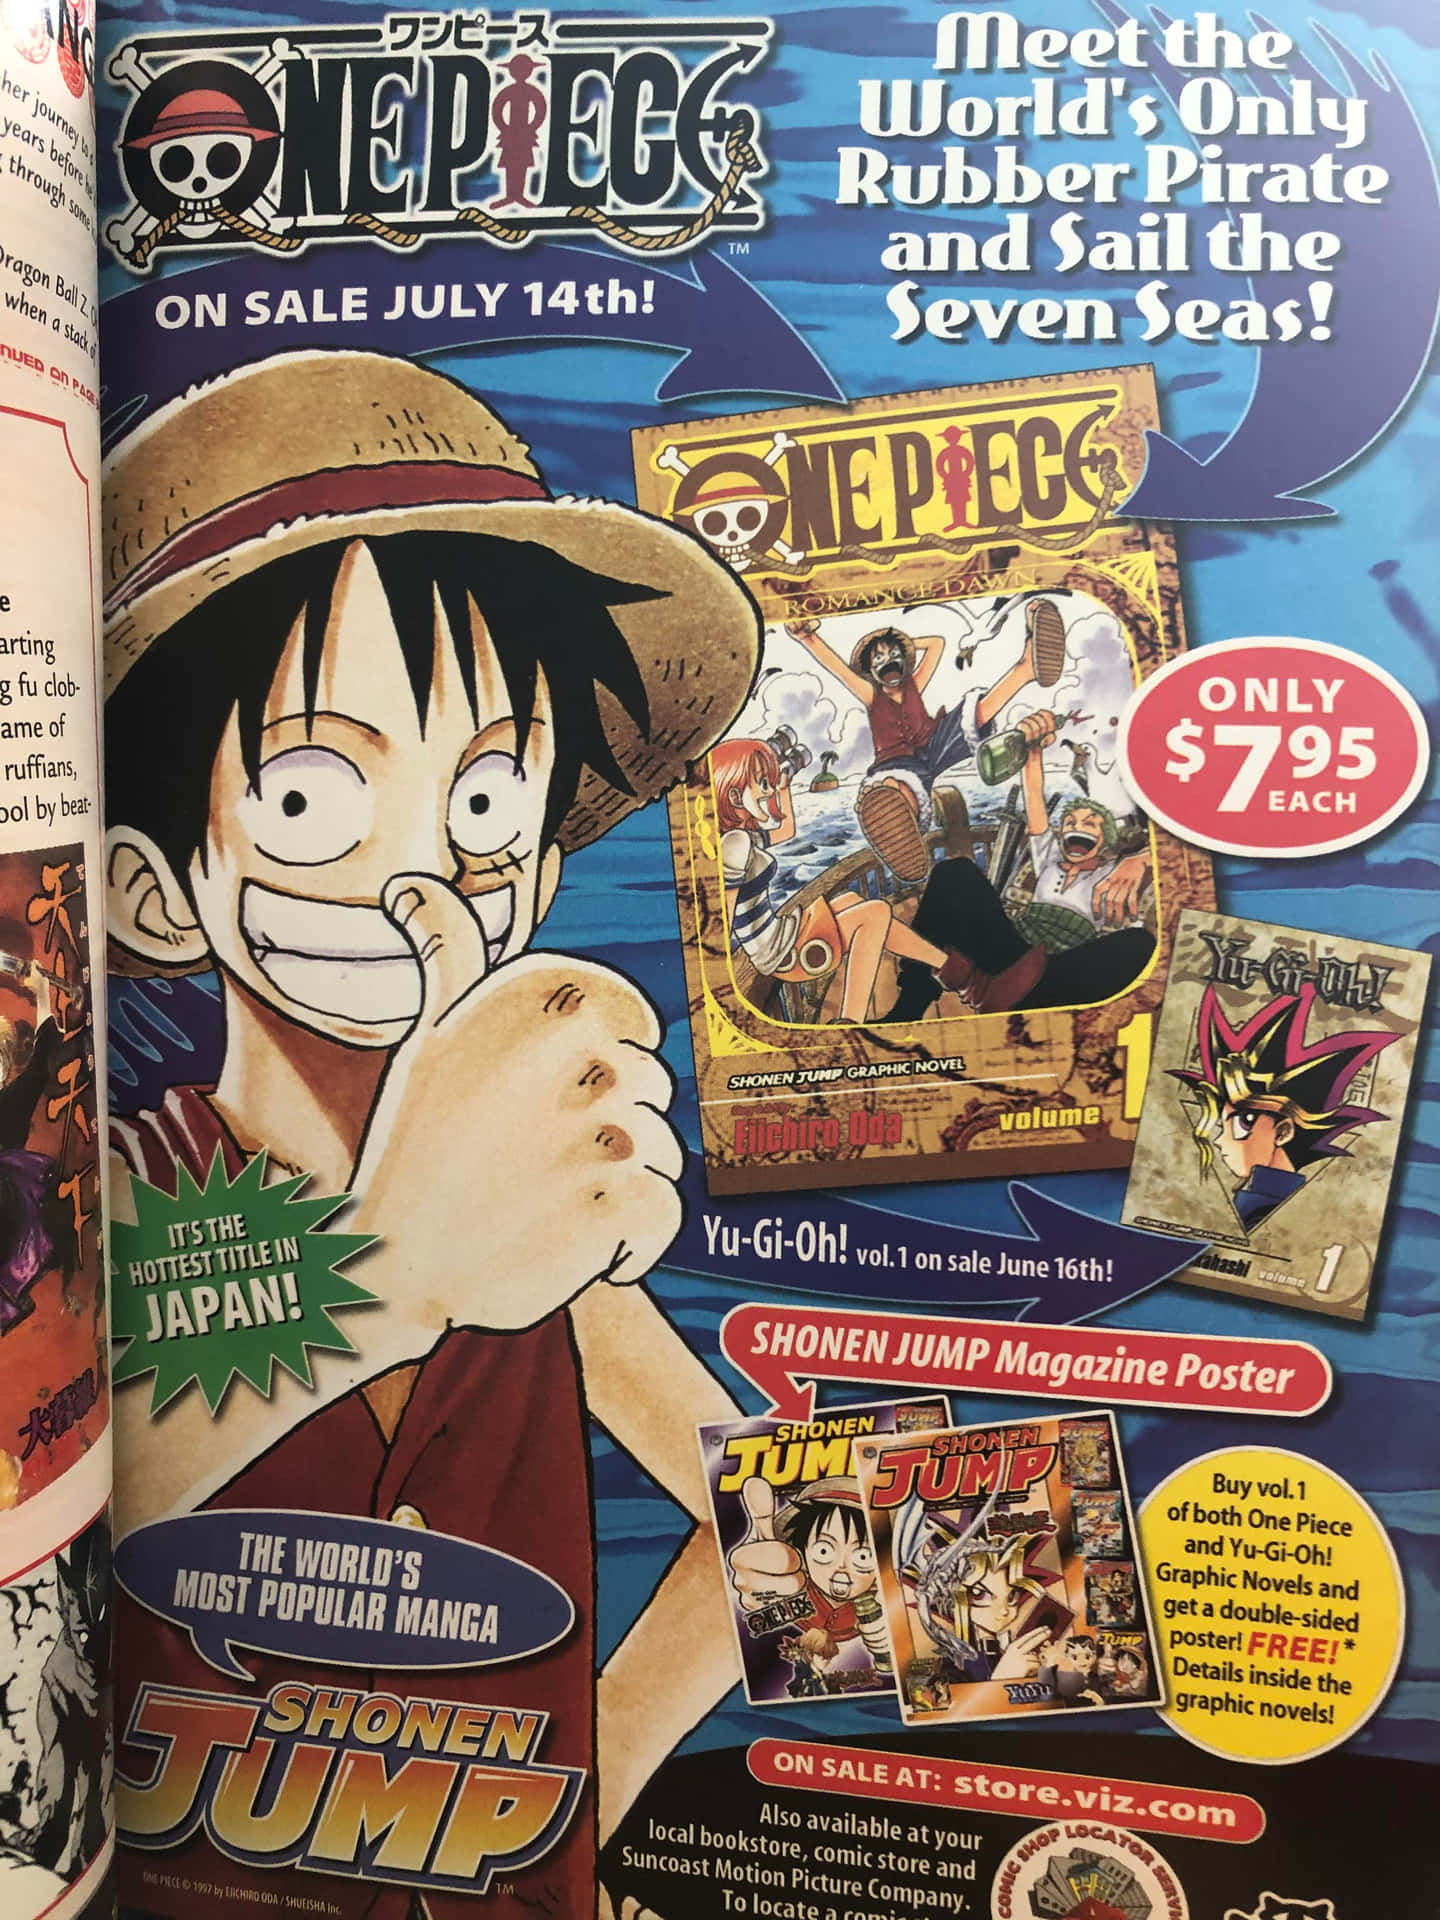 New Issue of Popular Manga Series Shonen Jump Wallpaper